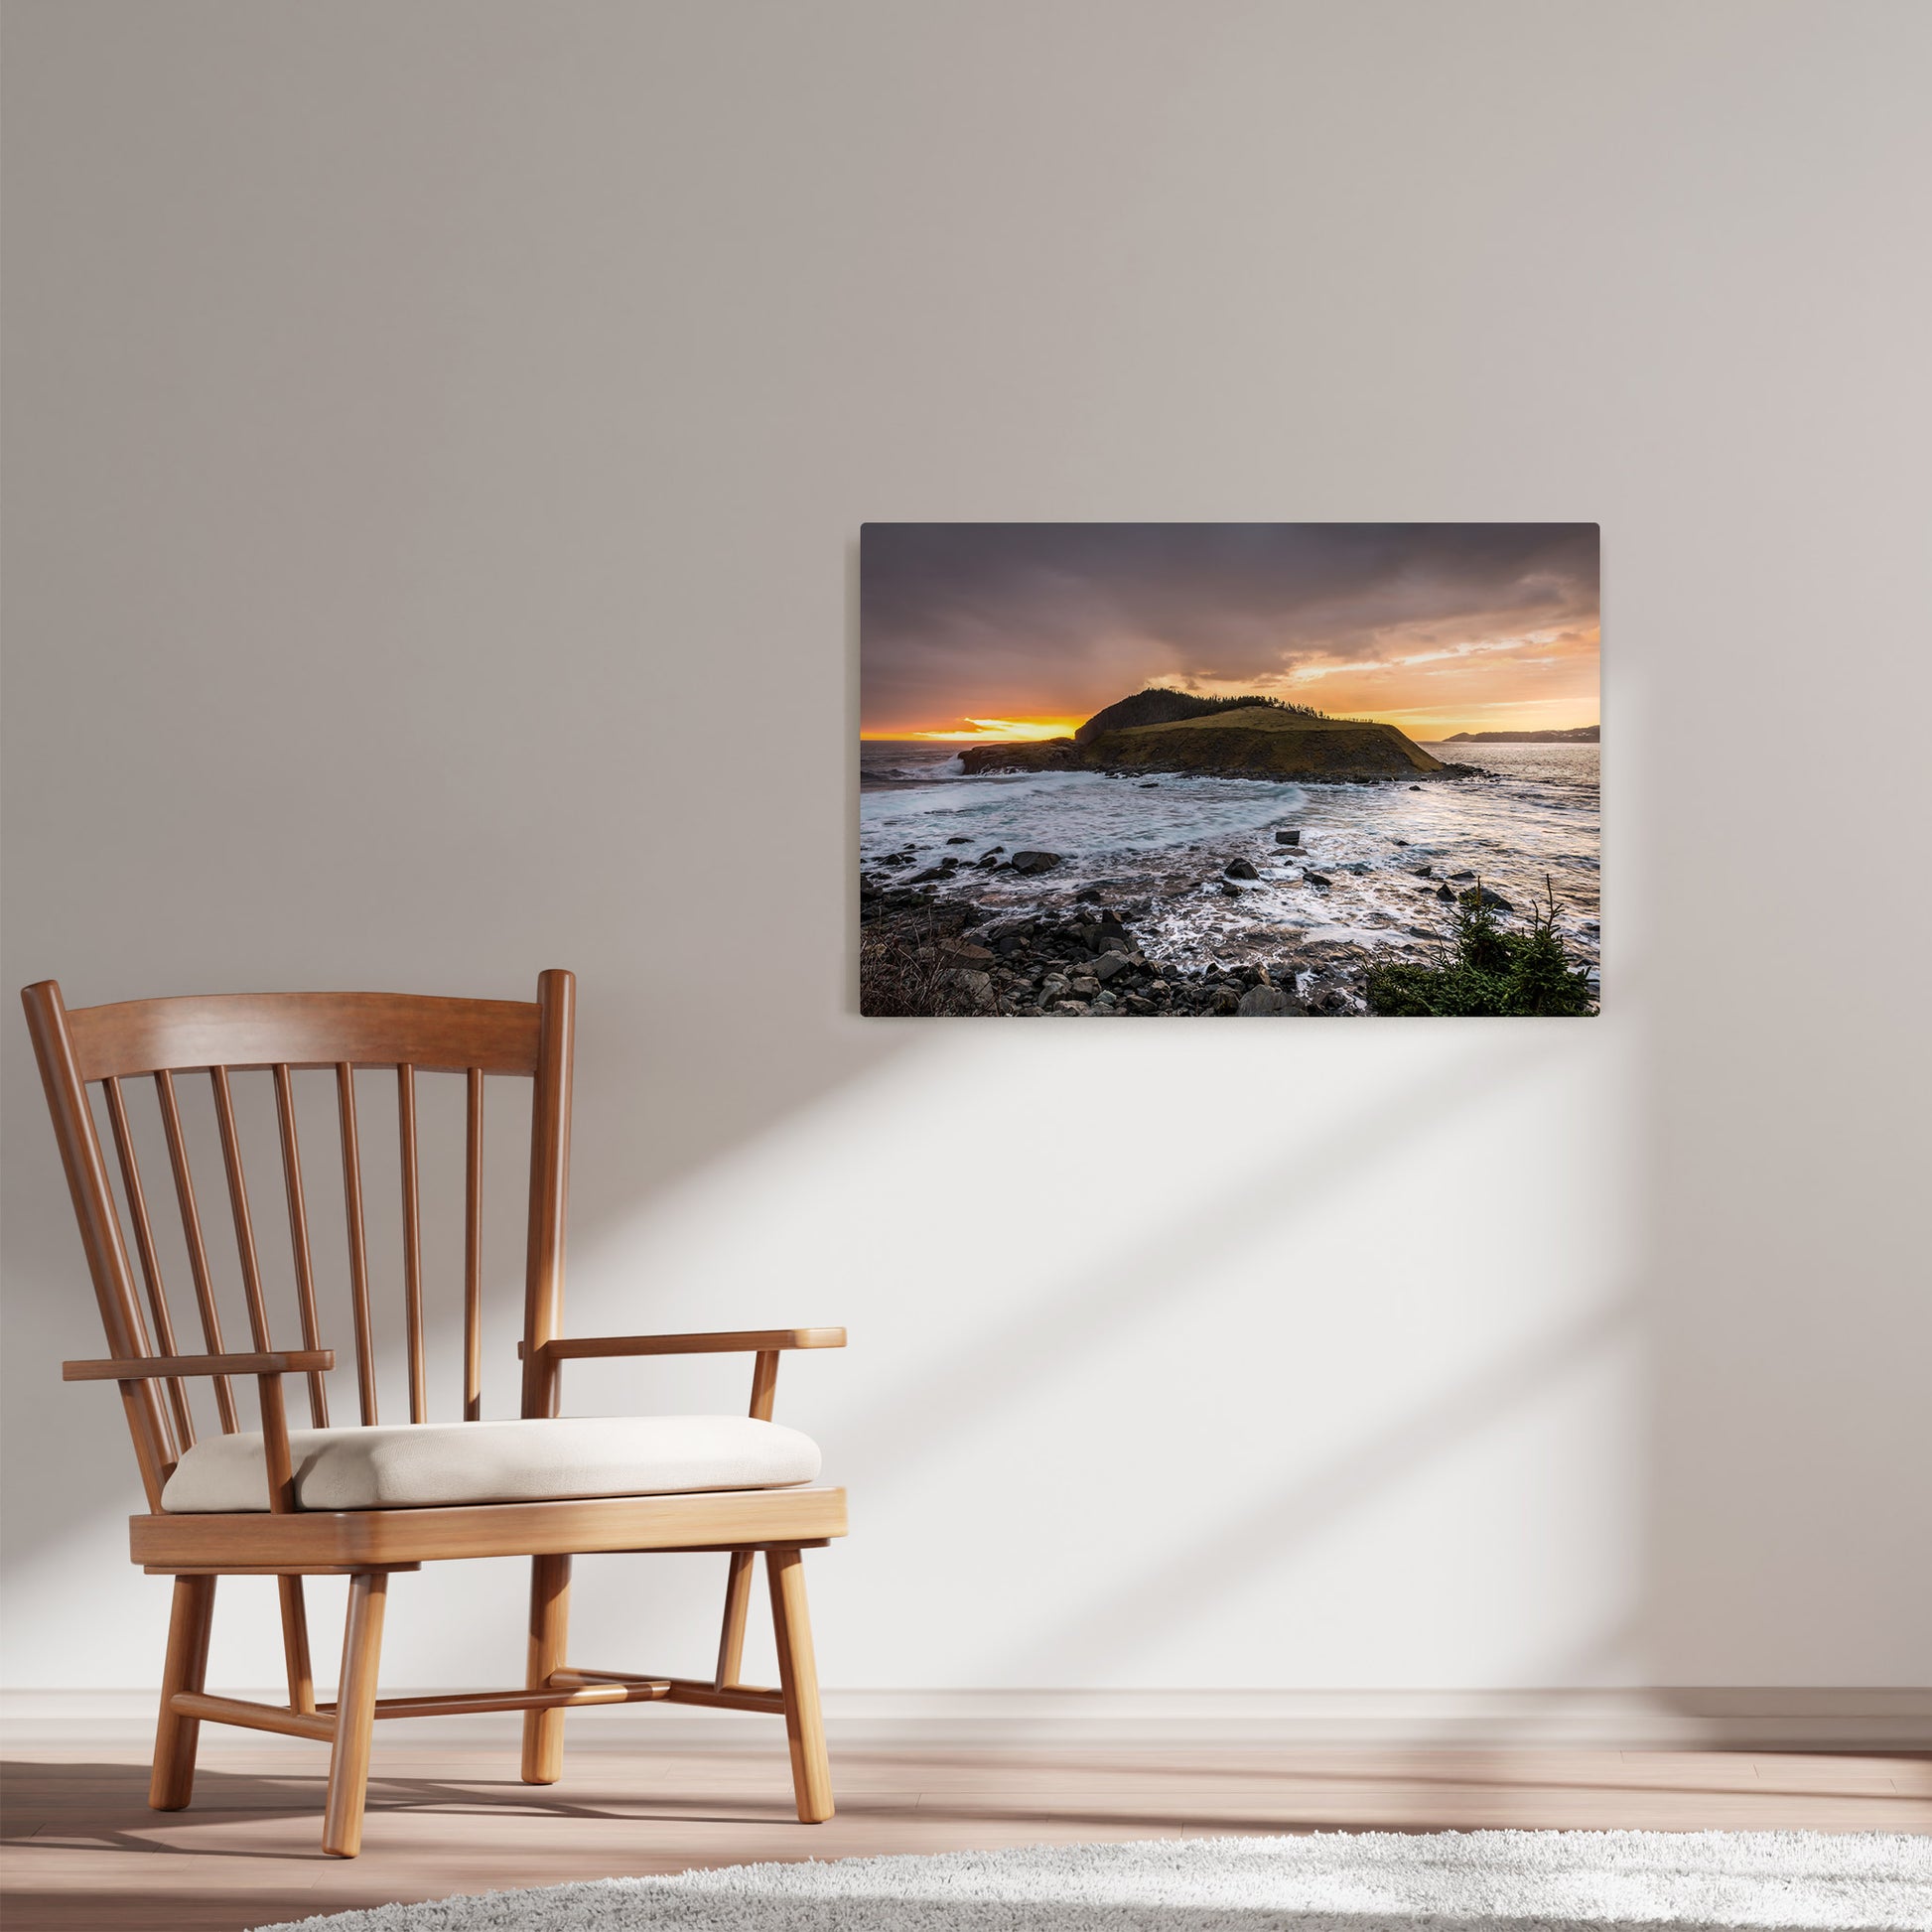 Ray Mackey's Tors Cove Fox Island photography reproduced on HD metal print and displayed on wall